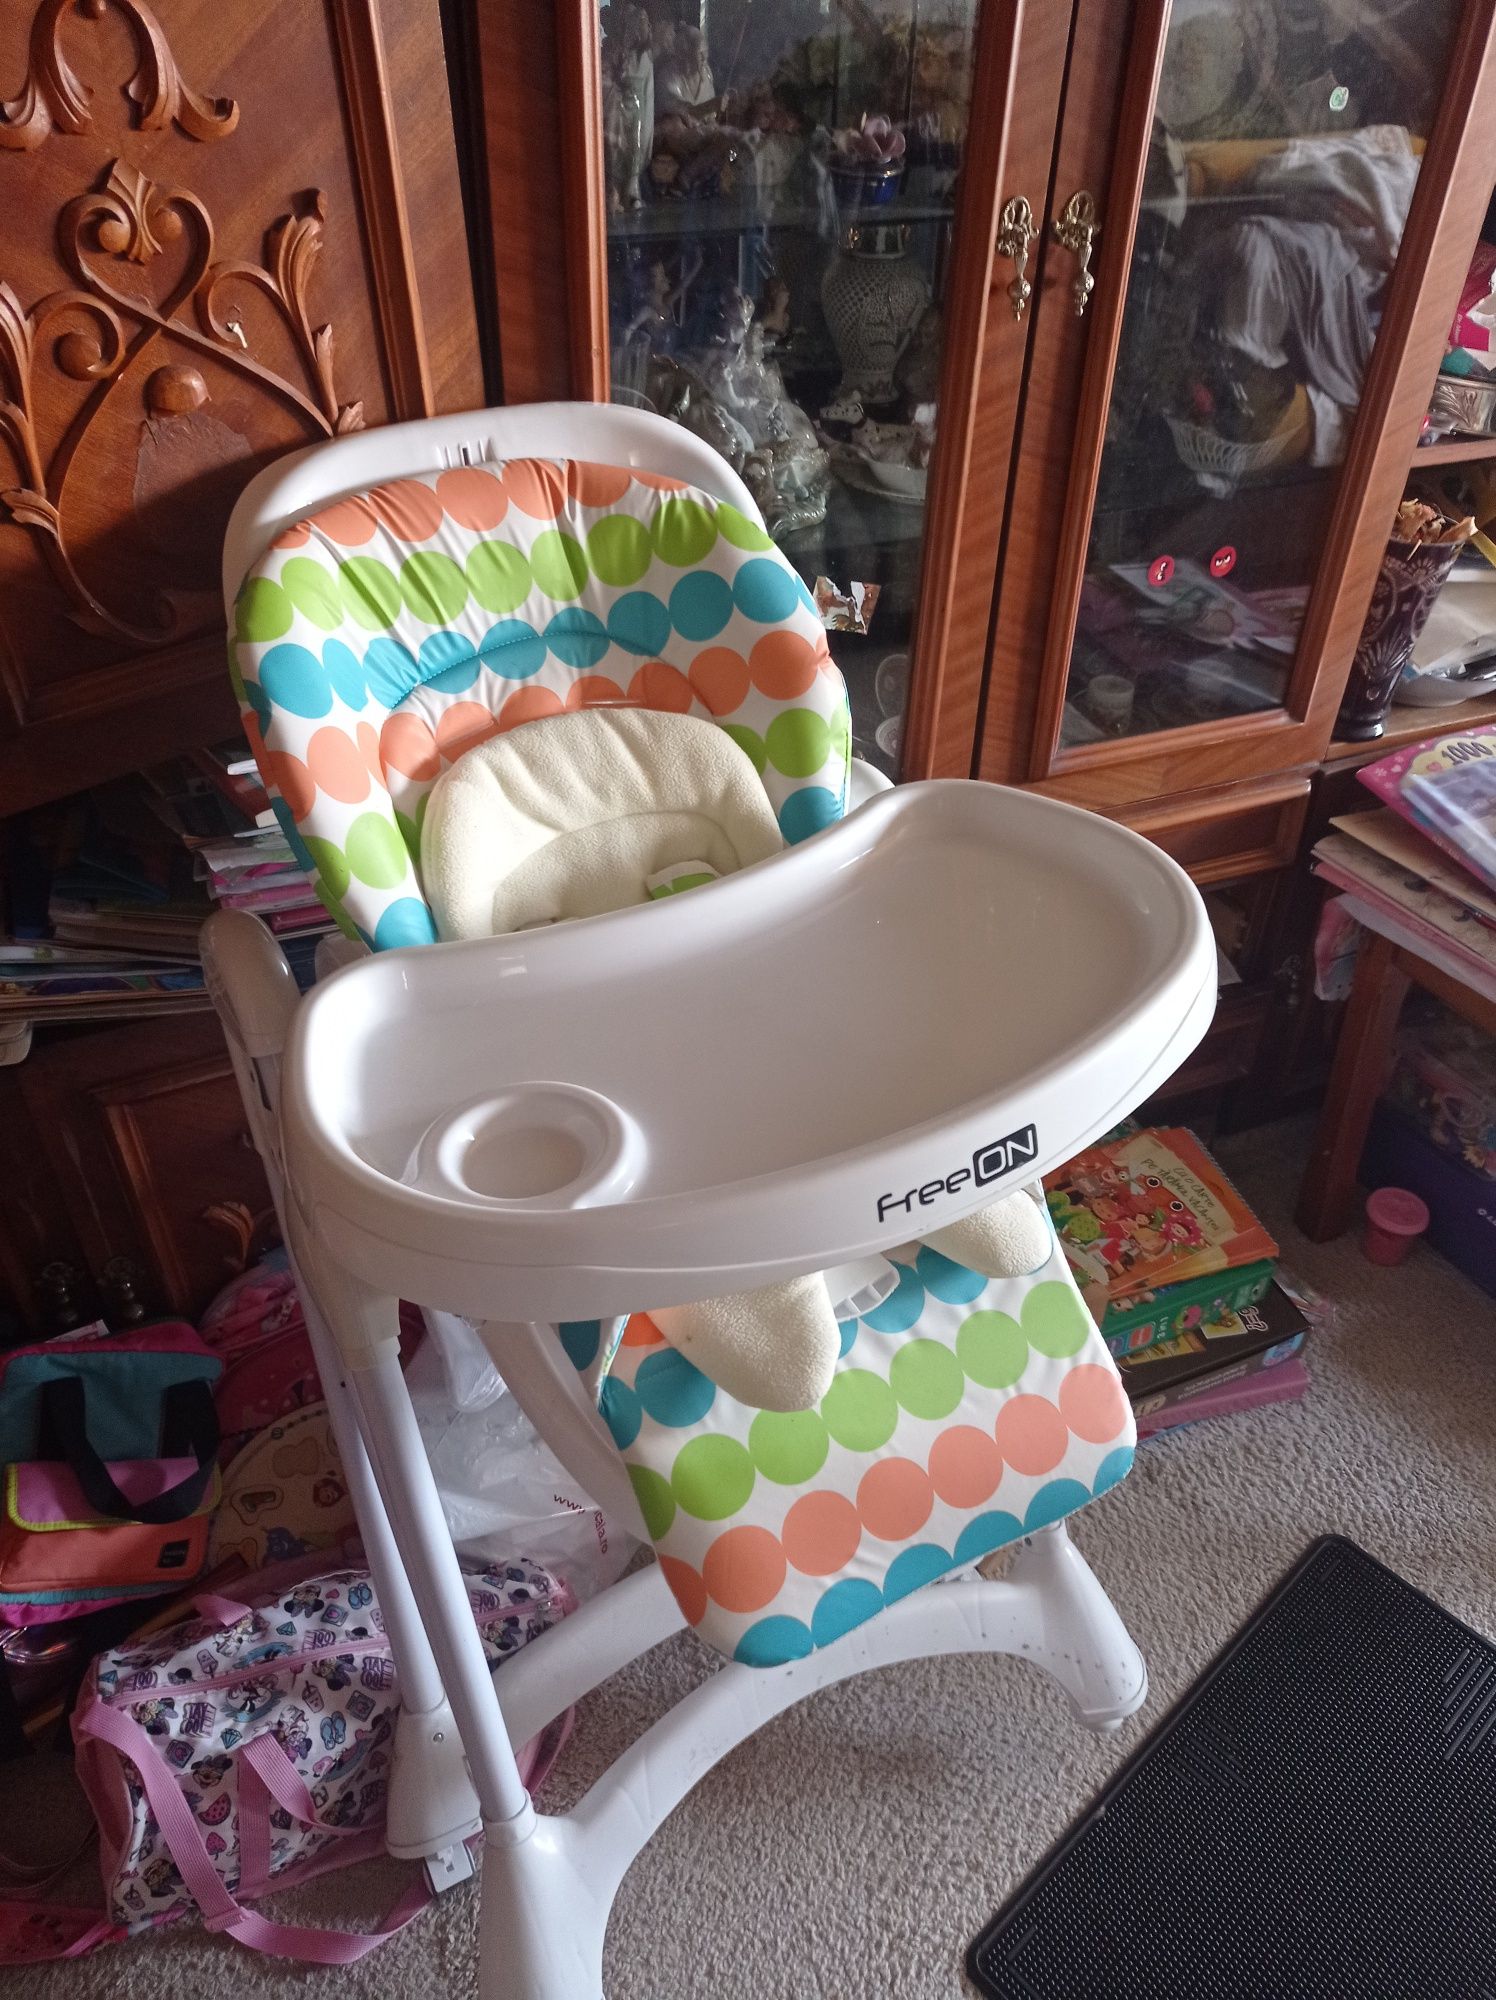 Scaun bebeluș pentru servit masa